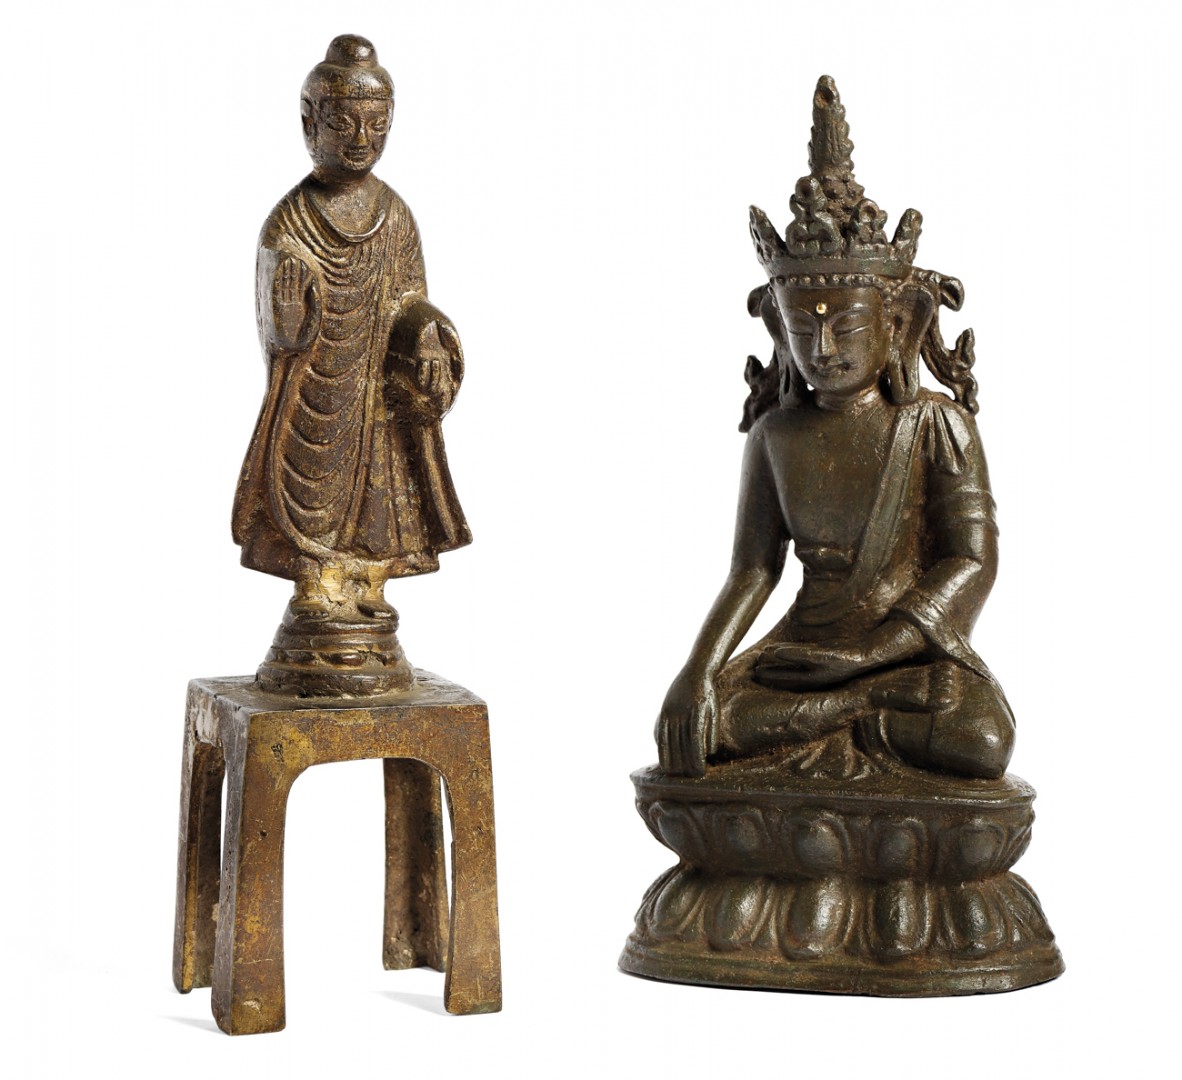 UN BUDDHA E UN BODHISATTVA Cina, stile Tang e Birmania, XVIII-XIX secolo - A BUDDHA AND A